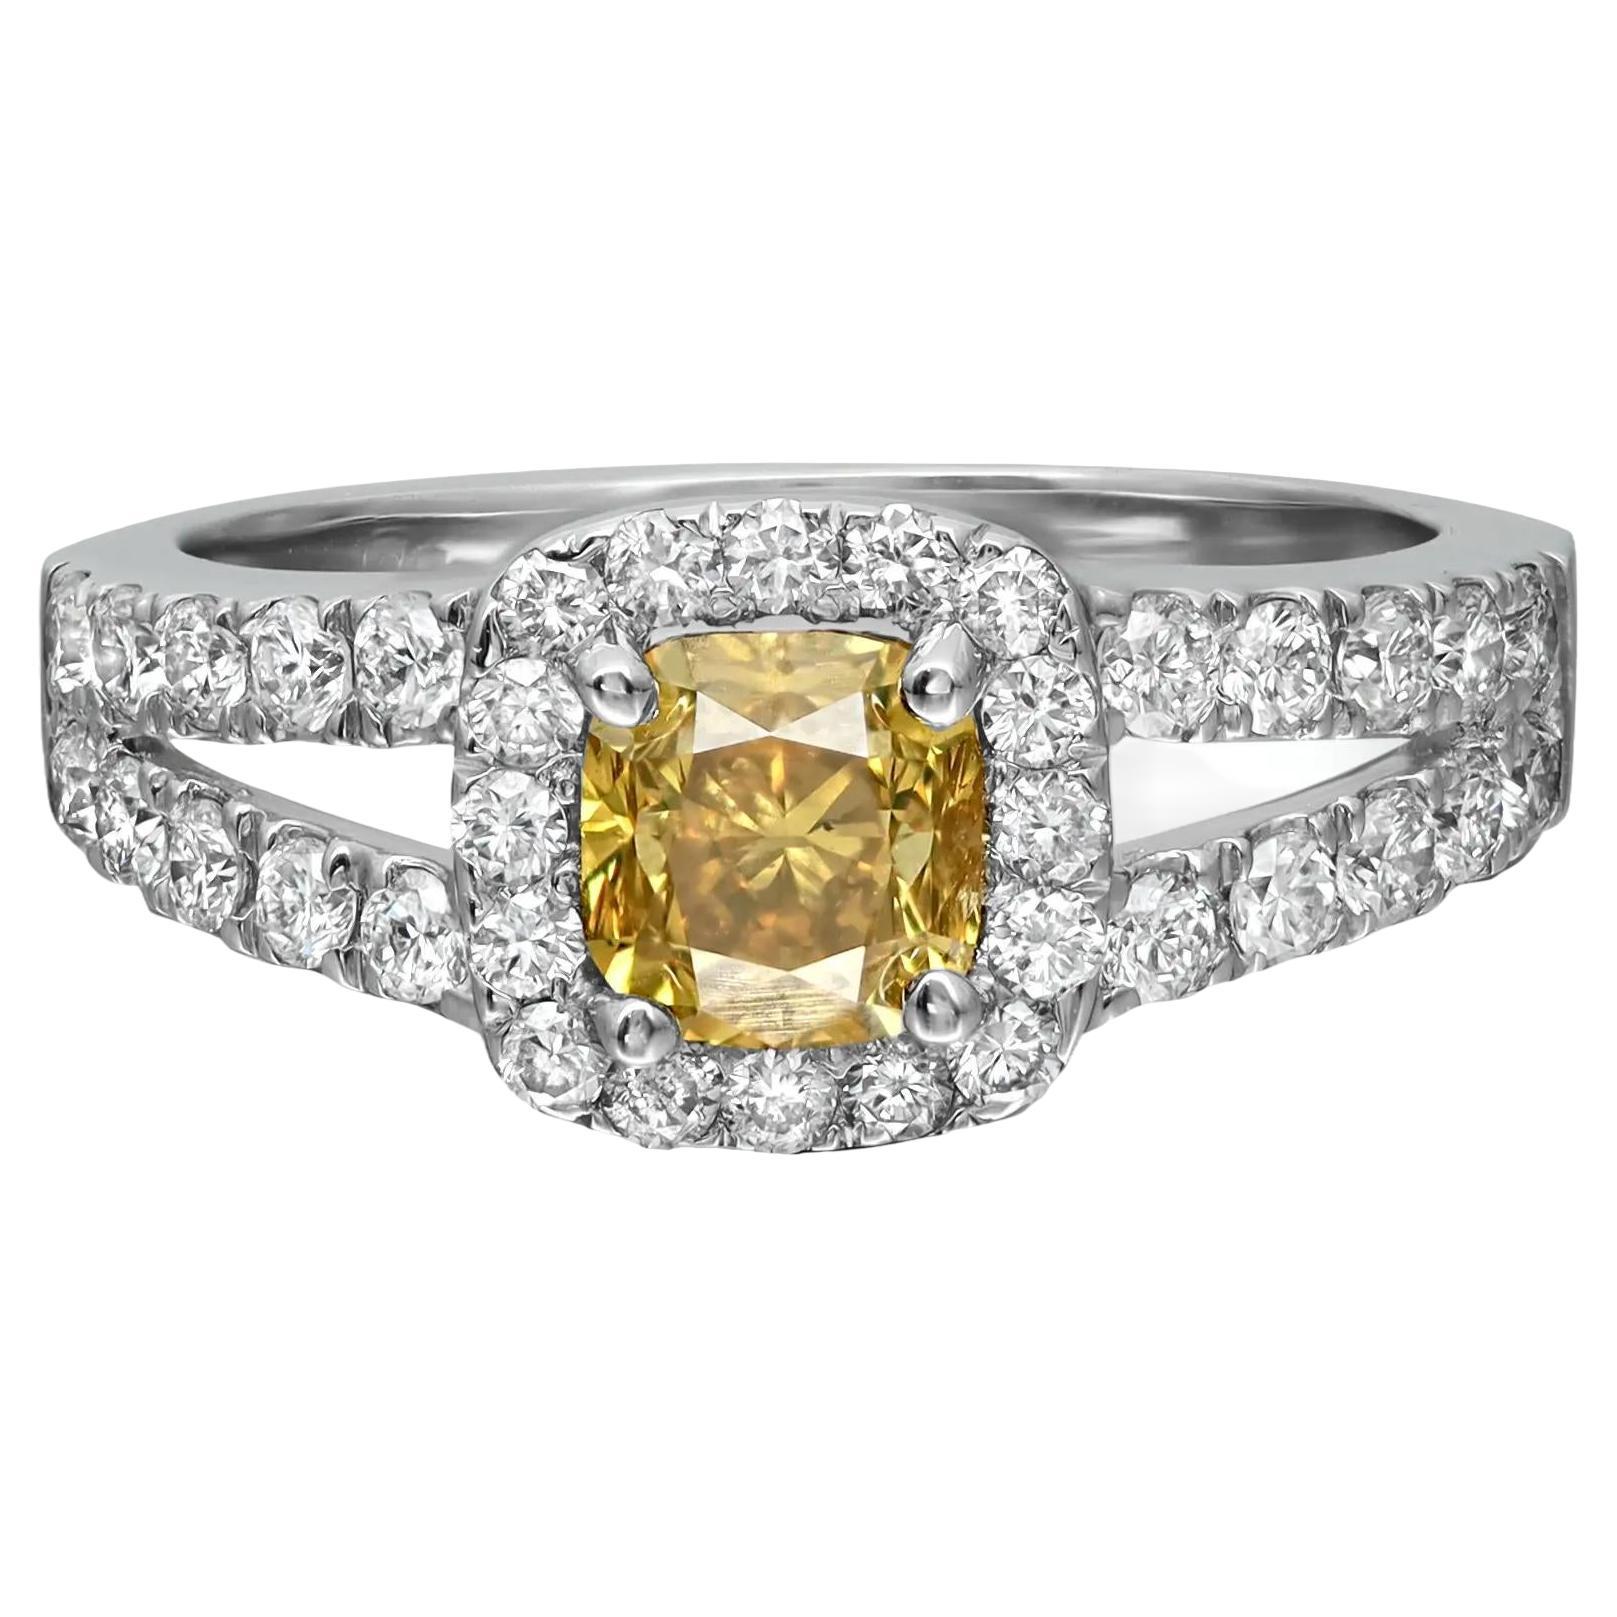 Cushion Cut Yellow & White Diamond Engagement Ring 18K White Gold Size 6.5